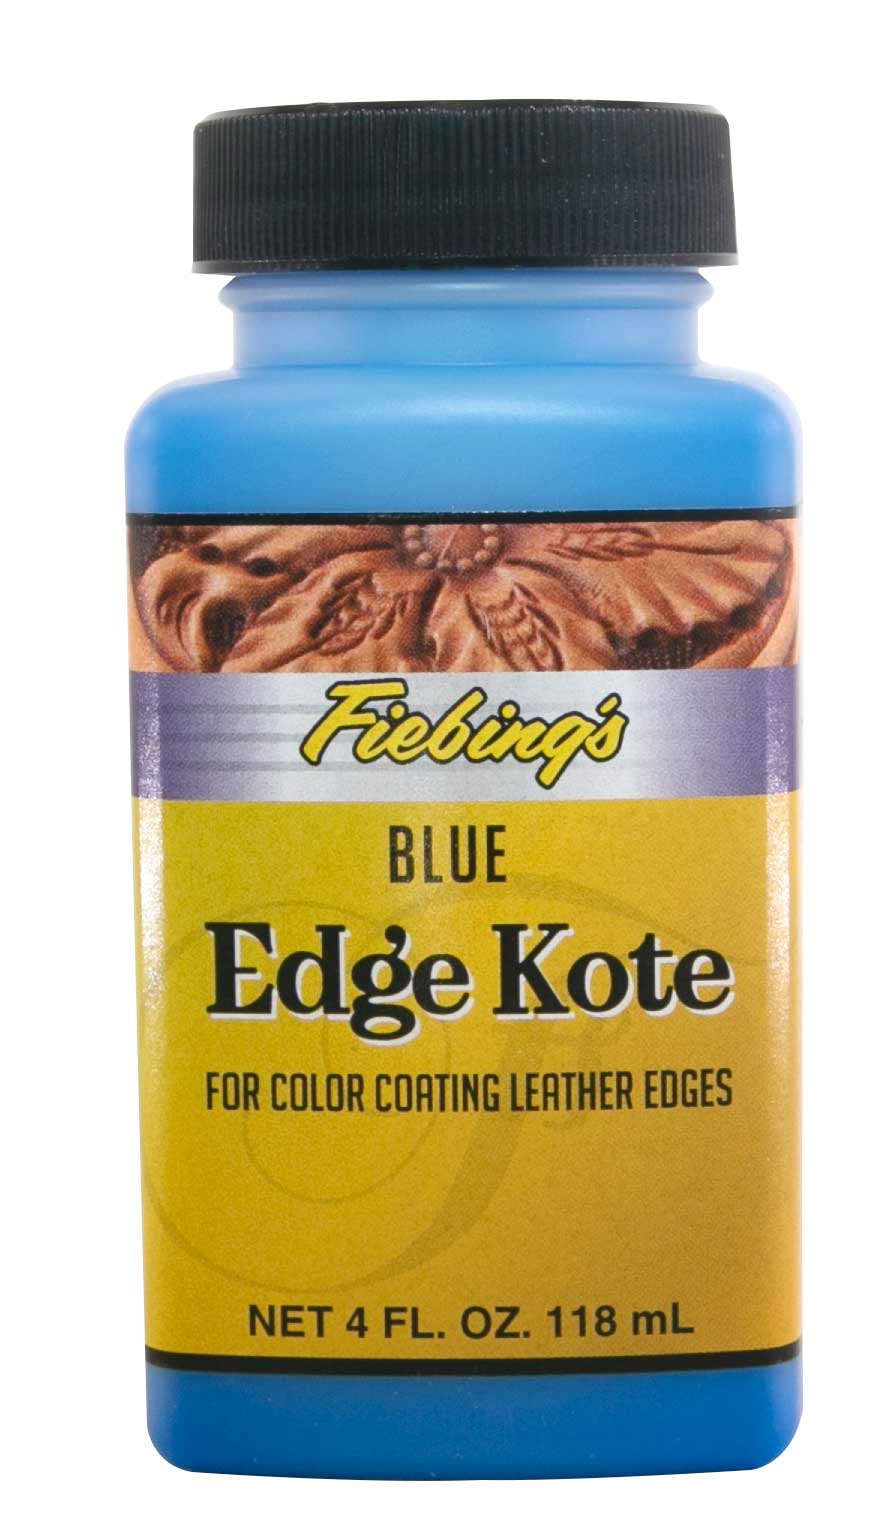 New Edge Kote Colors! – Fiebing's